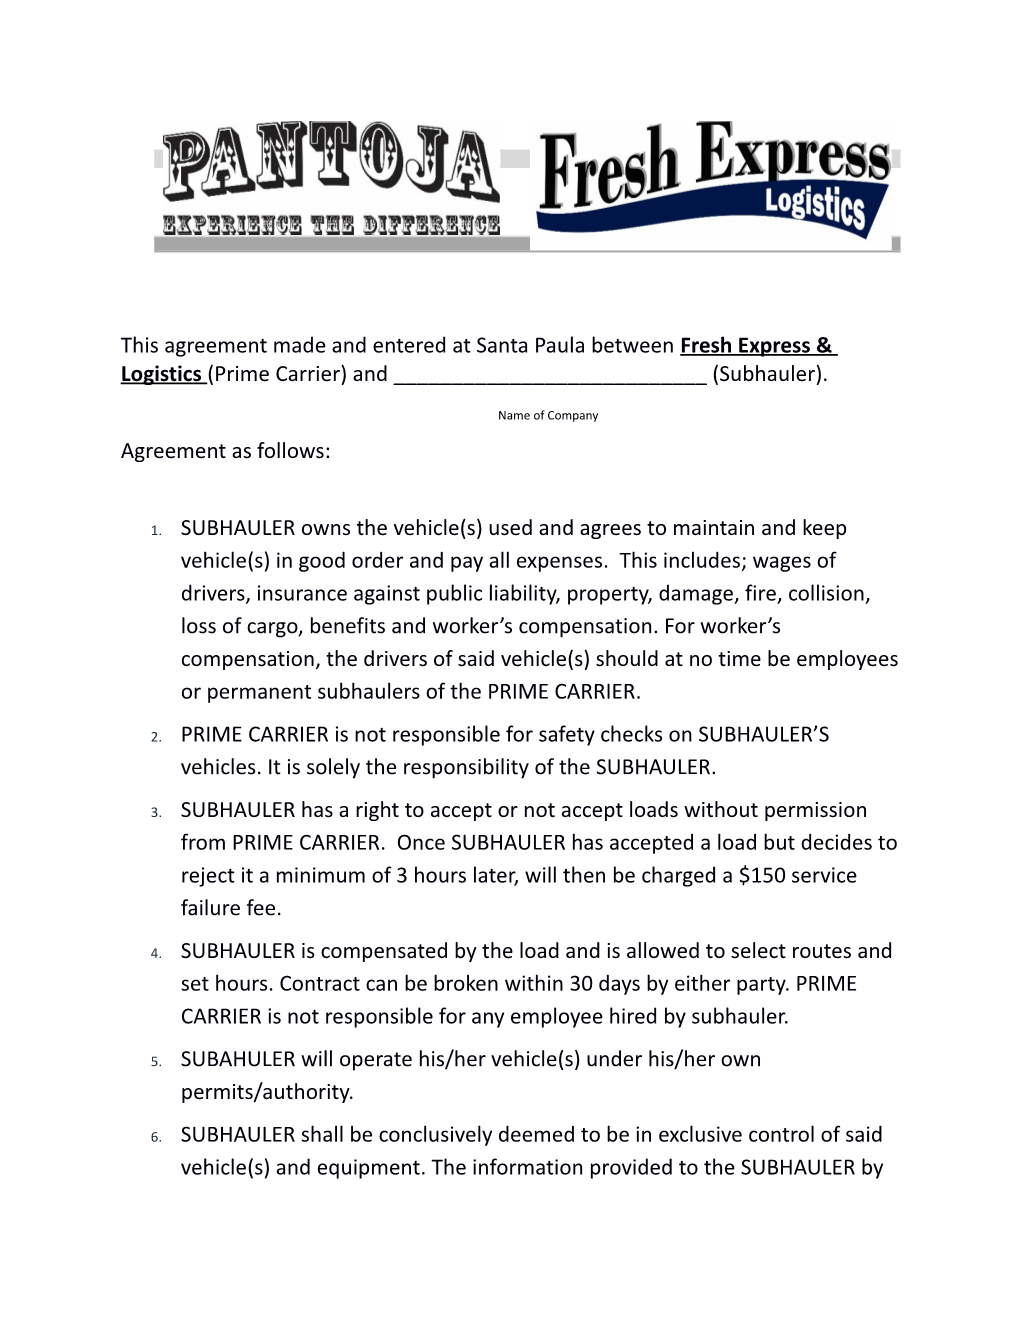 This Agreement Made and Entered at Santa Paula Between Fresh Express & Logistics (Prime